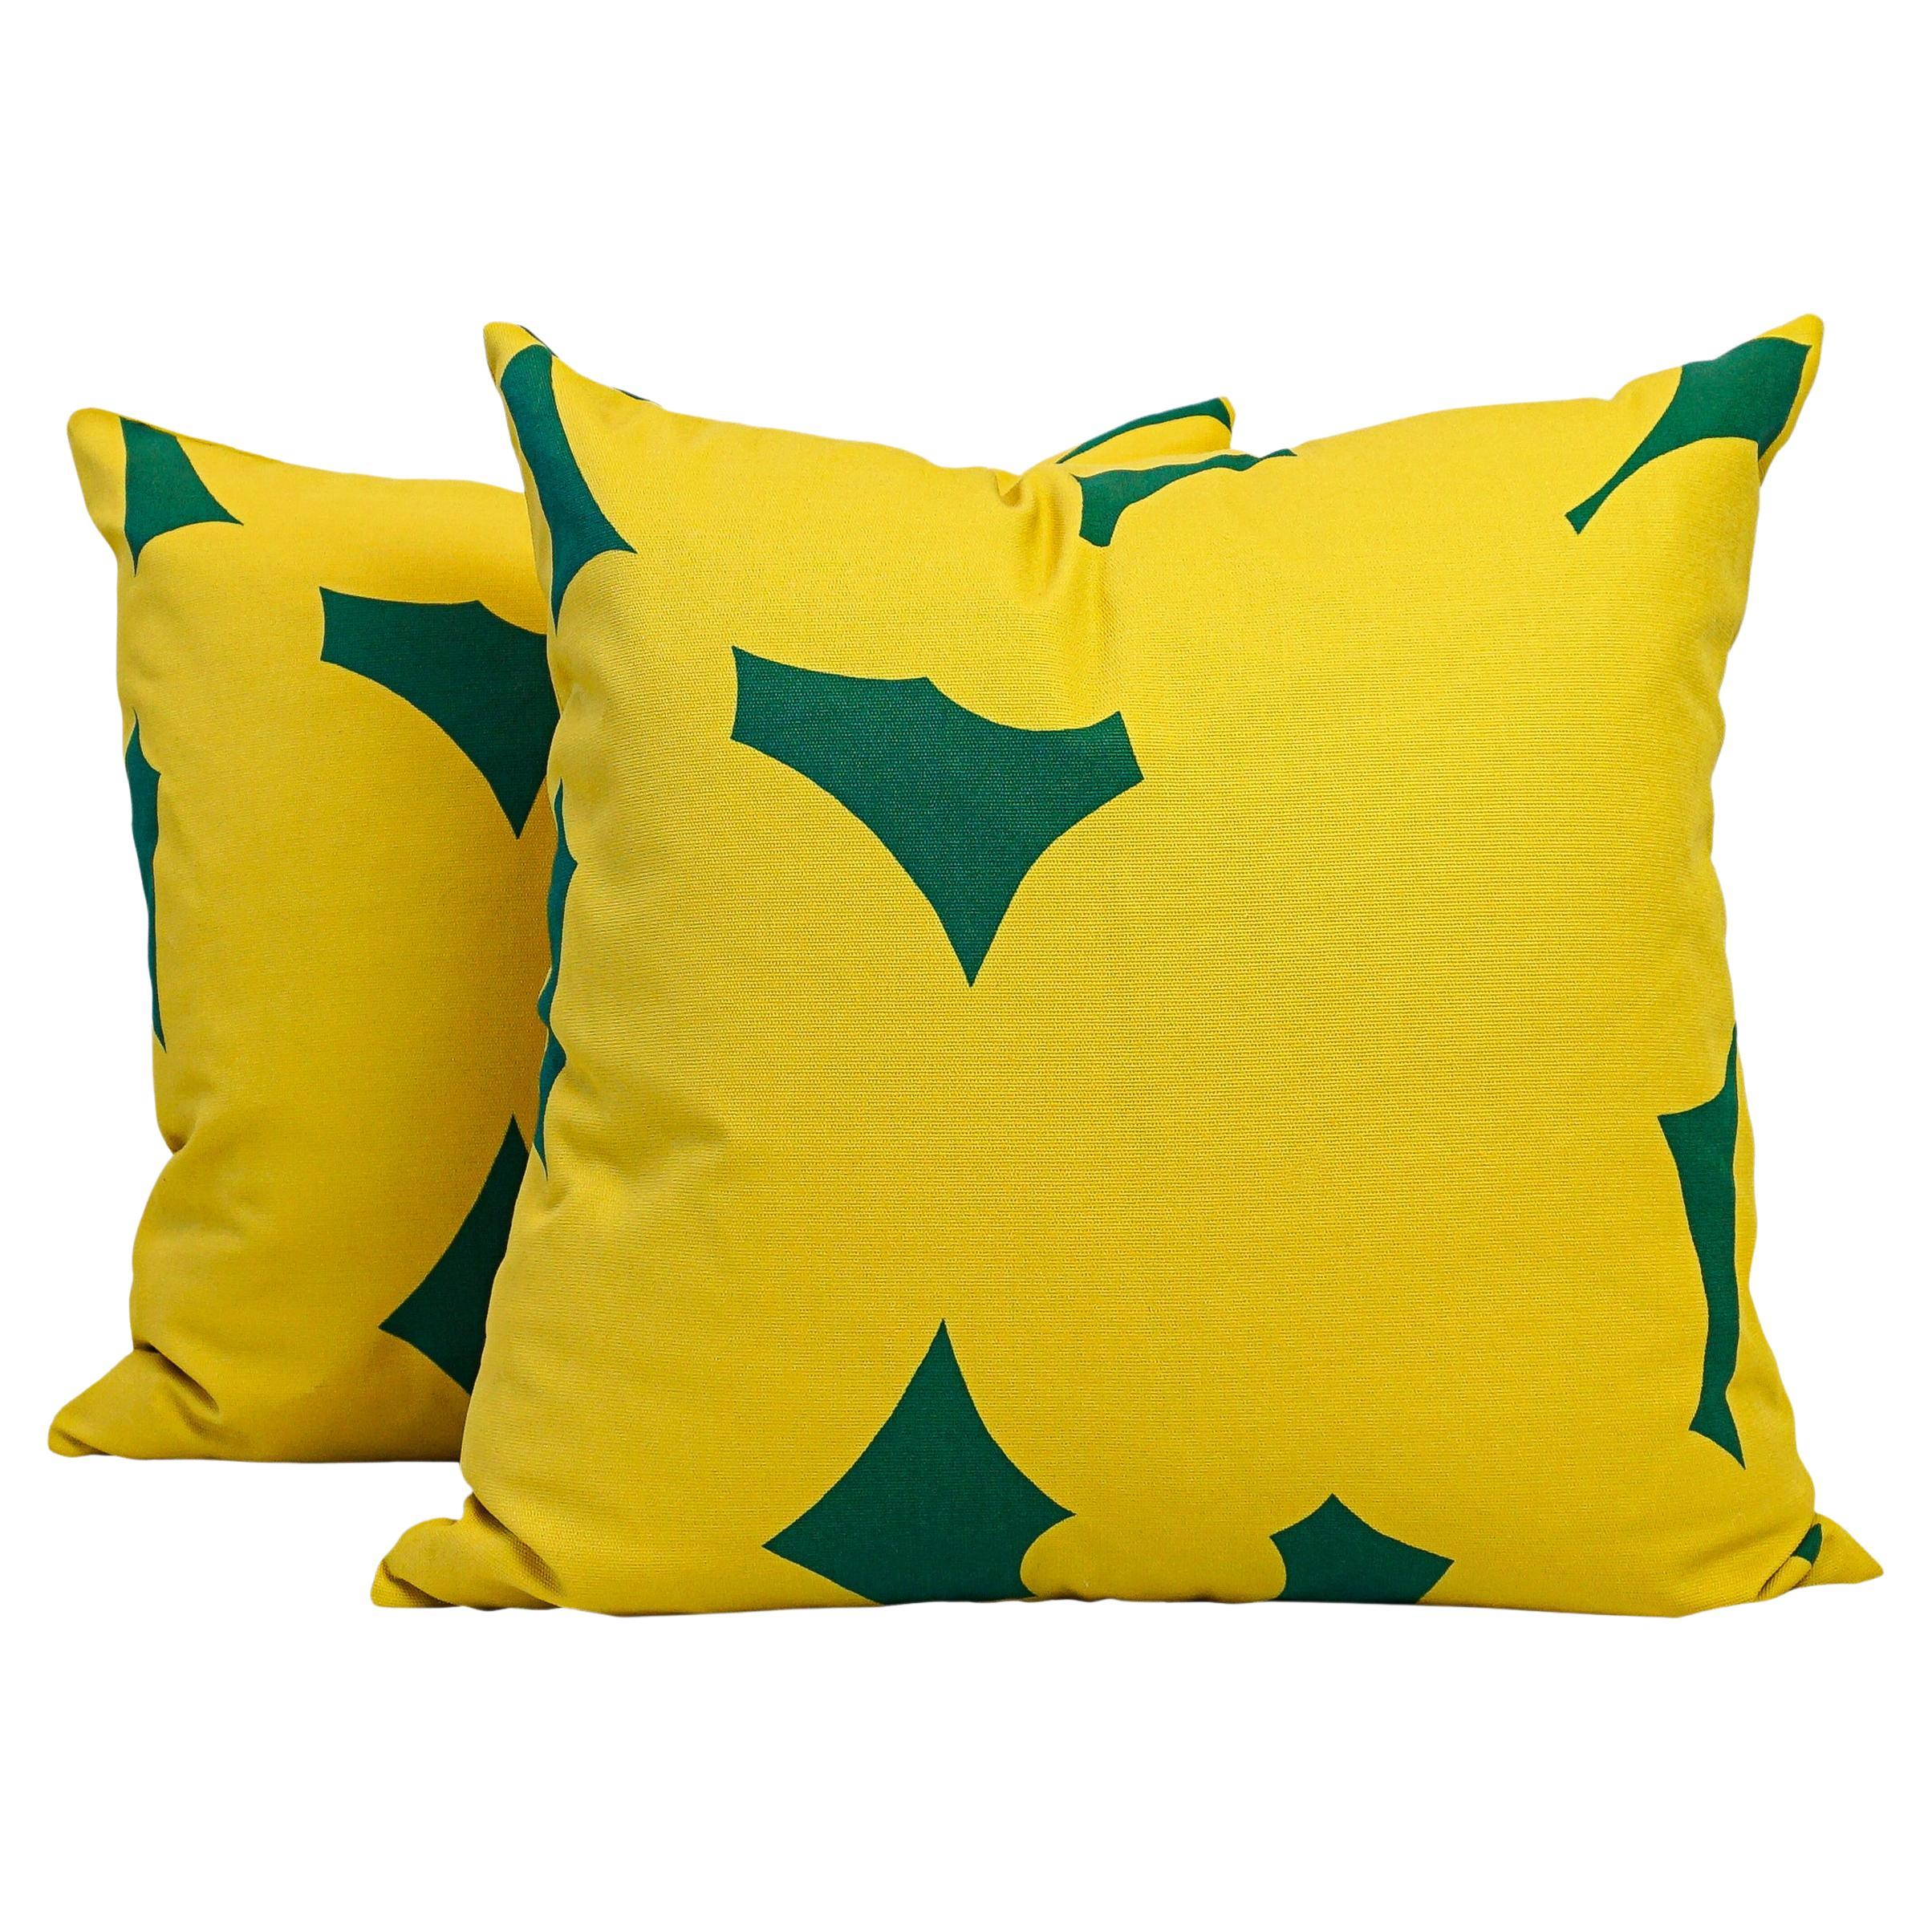 Abstract Citron and Green Throw Pillows